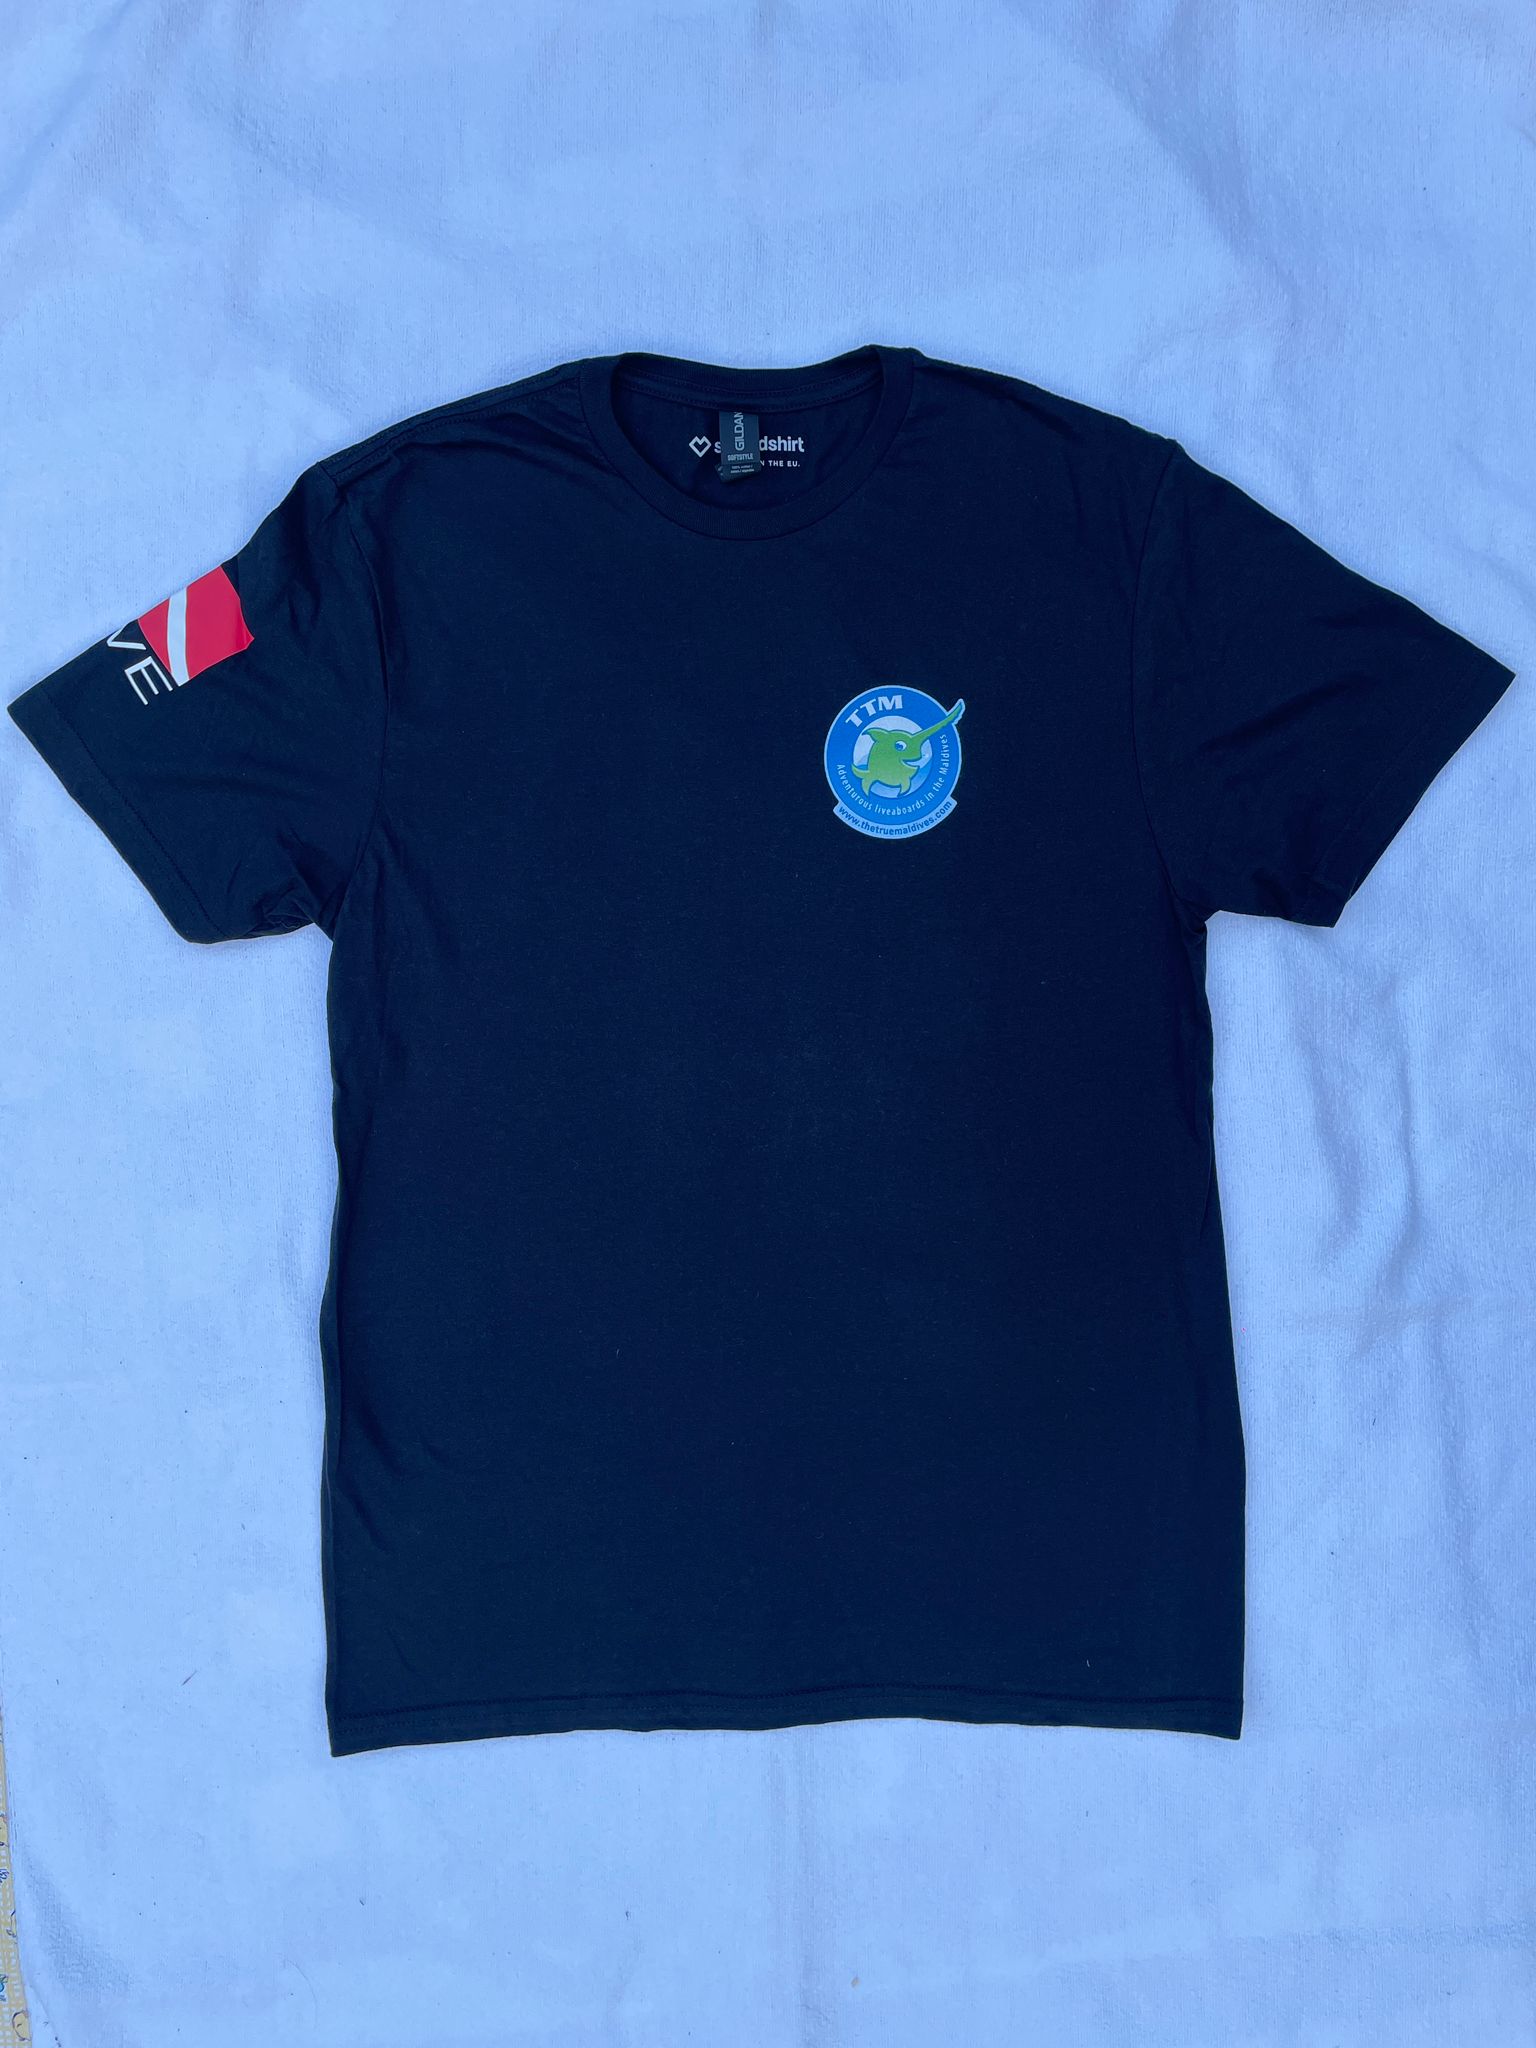 The True Maldives shirt